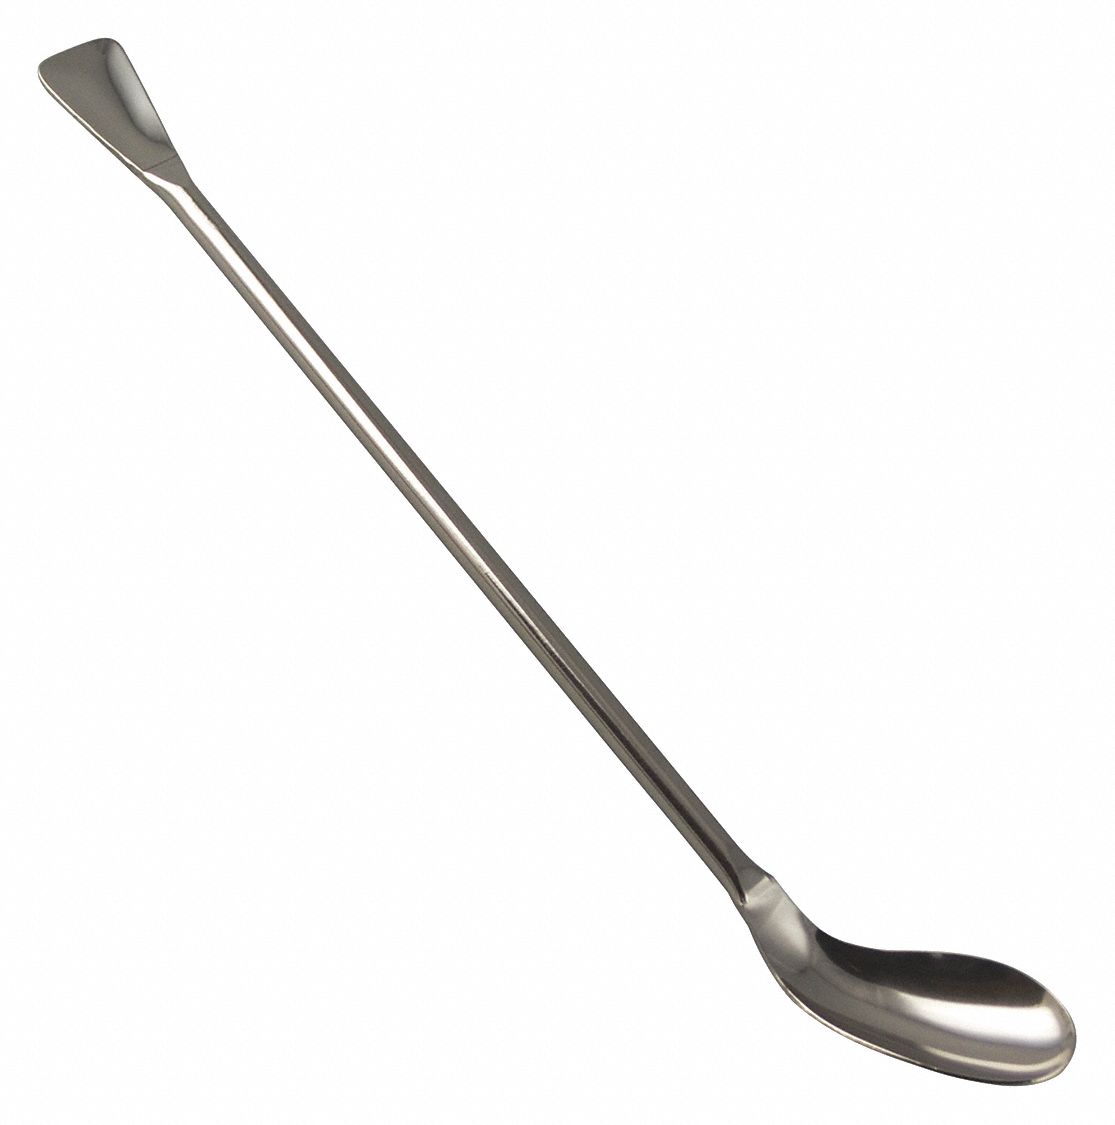 lab spatula sizes